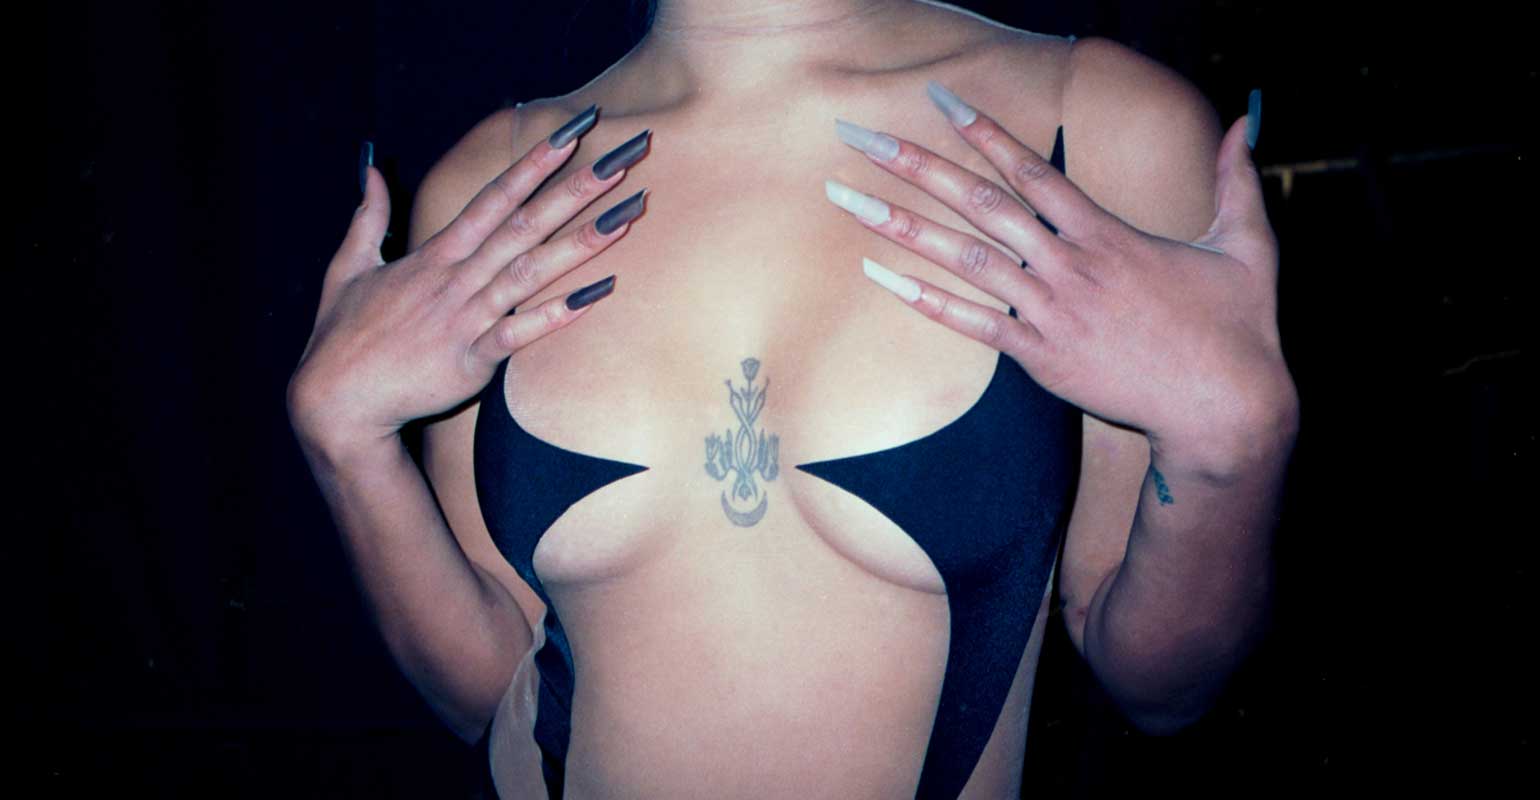 Model's chest with cutout Mugler bra